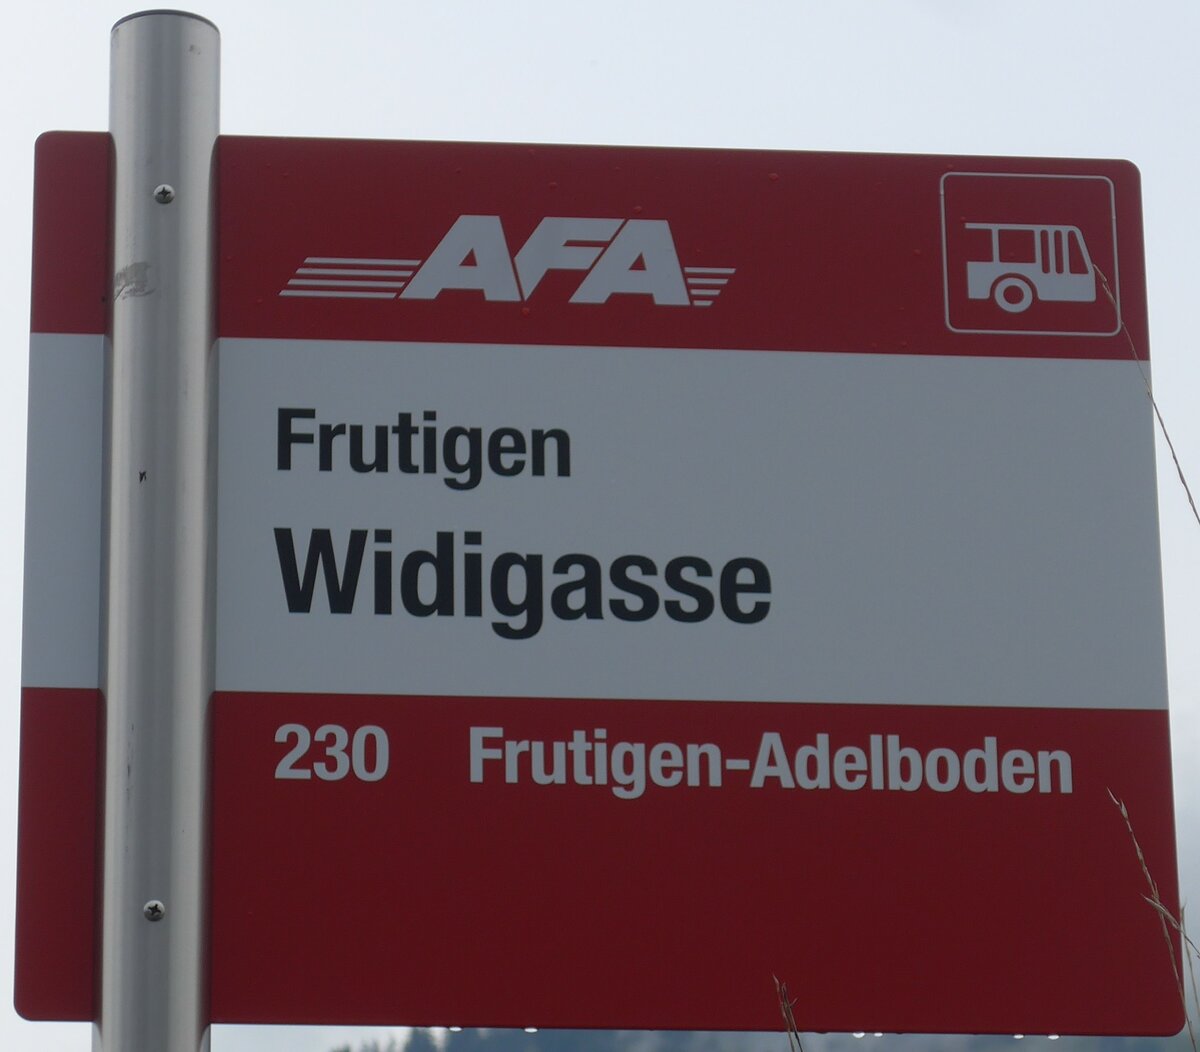 (198'074) - AFA-Haltestellenschild - Frutigen, Widigasse - am 1. Oktober 2018